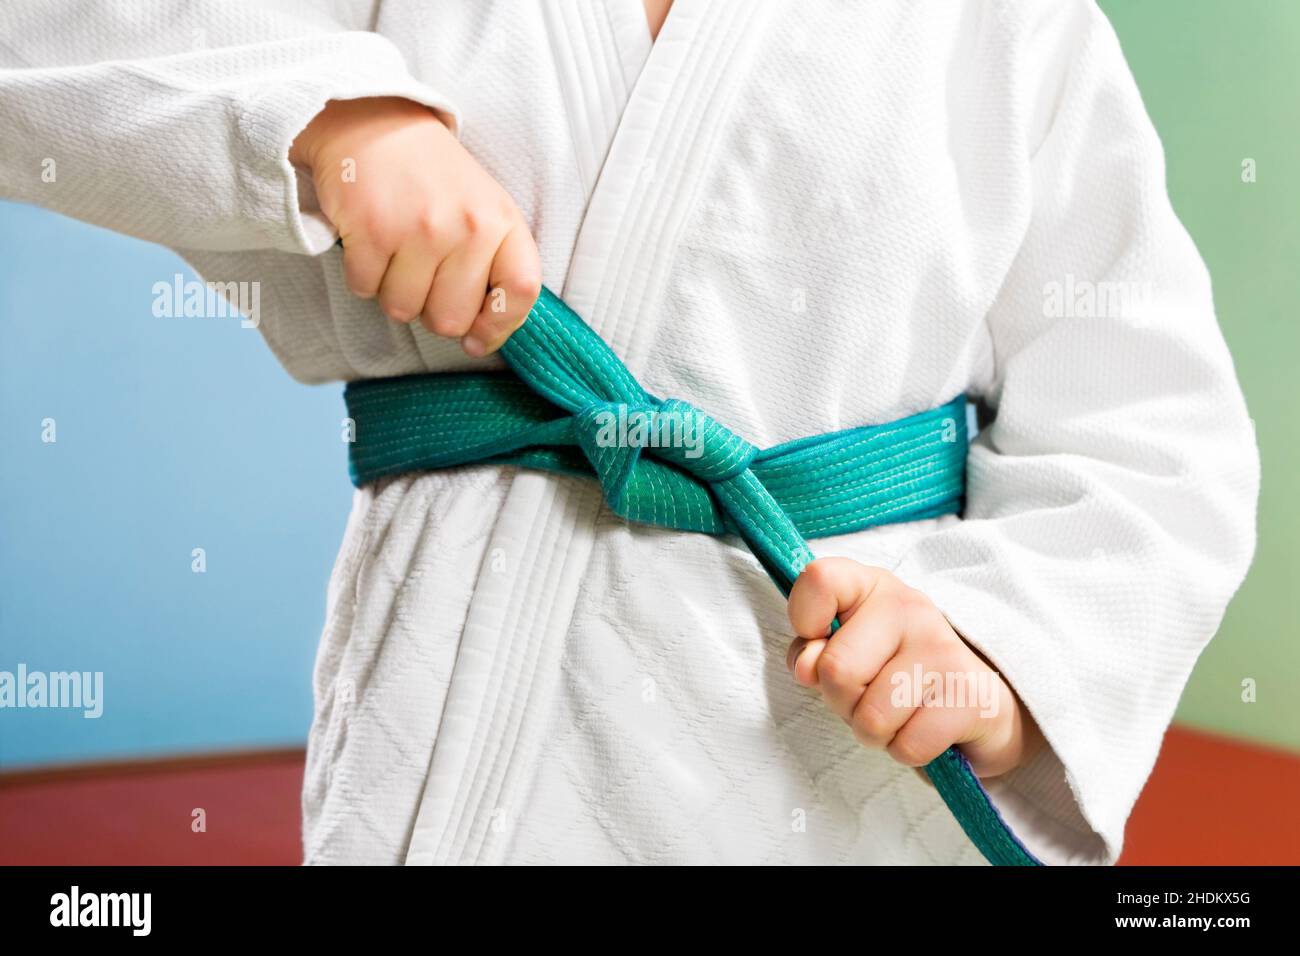 verde, judo, cinture, kimono, verde, judos, cintura Foto stock - Alamy